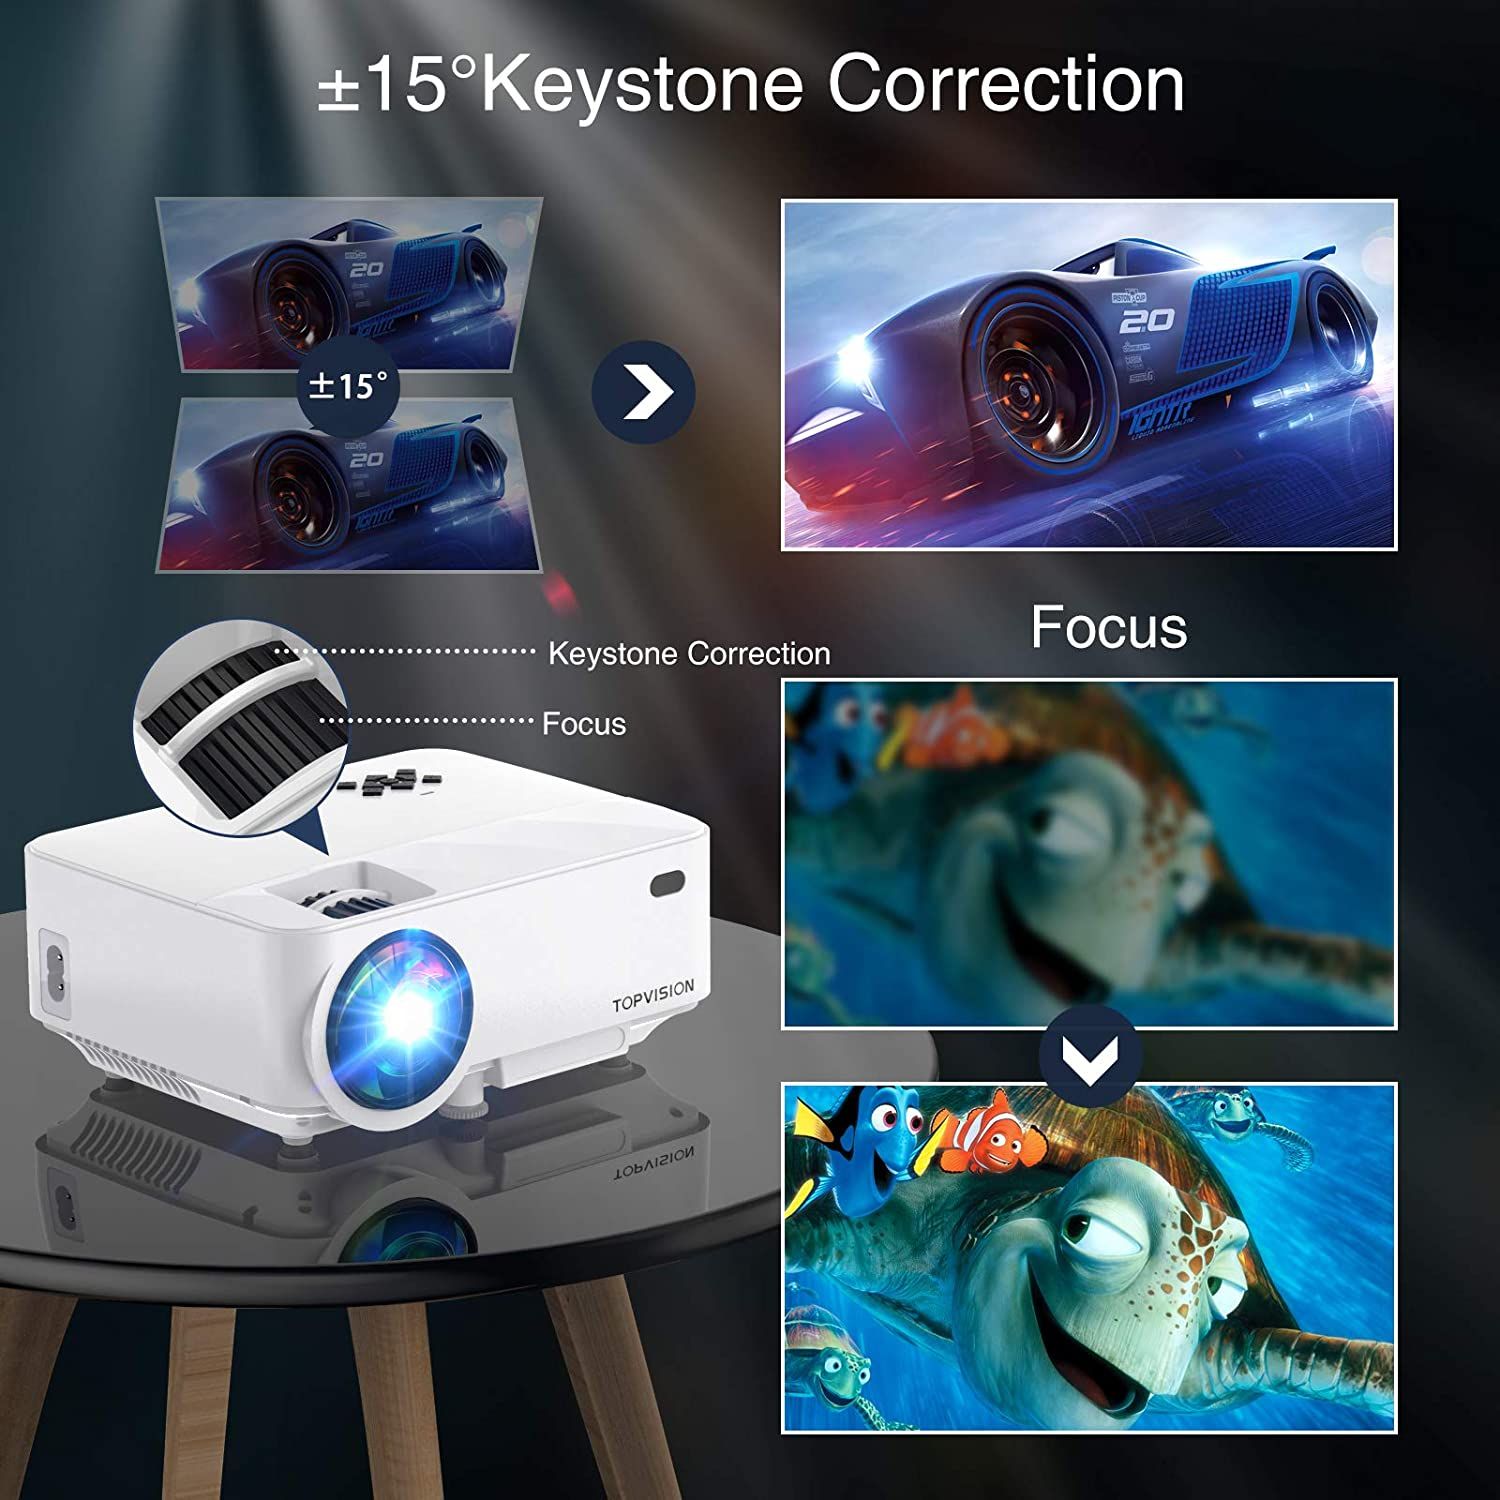 TopVision Mini Projector keystone correction